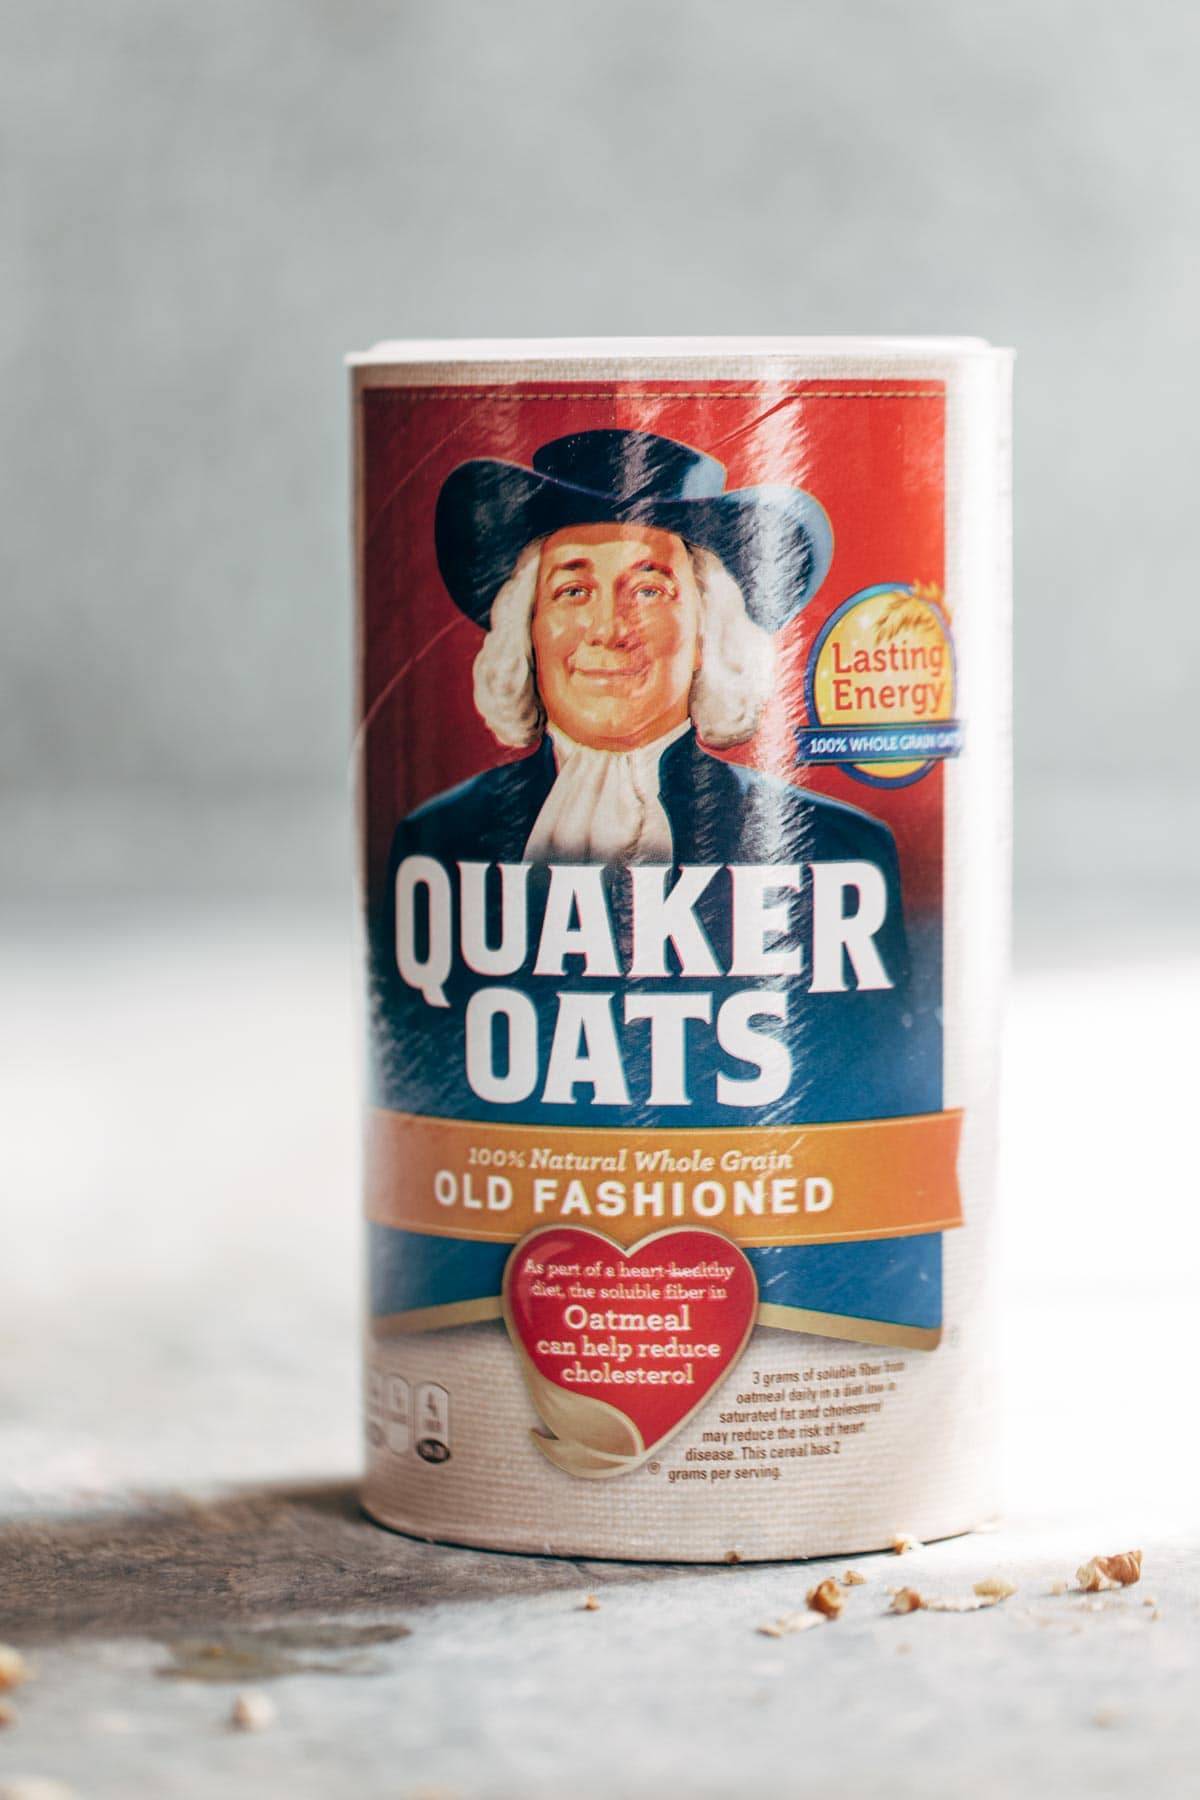 Quaker oats.